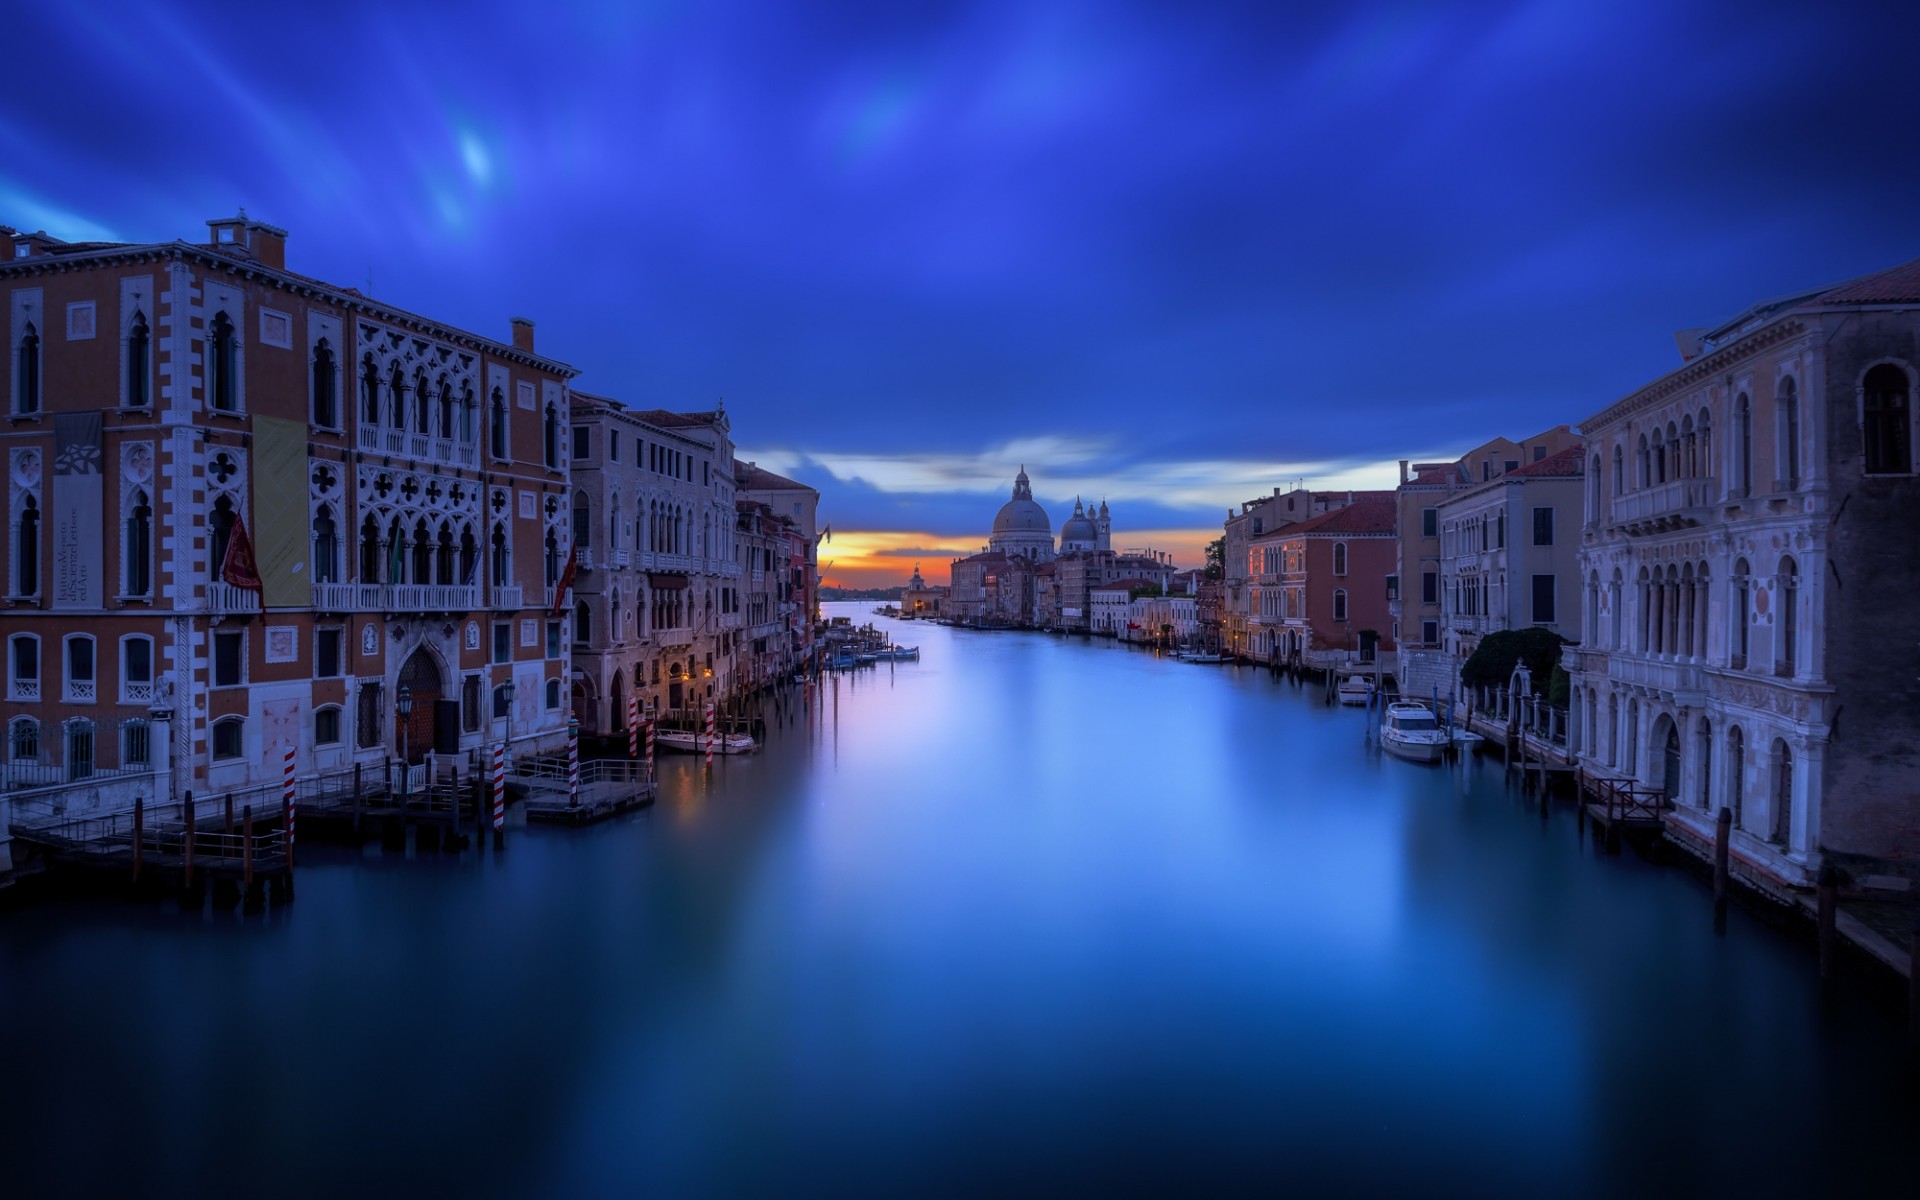 Grand Canal in Venice, Italy at Dusk by Guerel Sahin